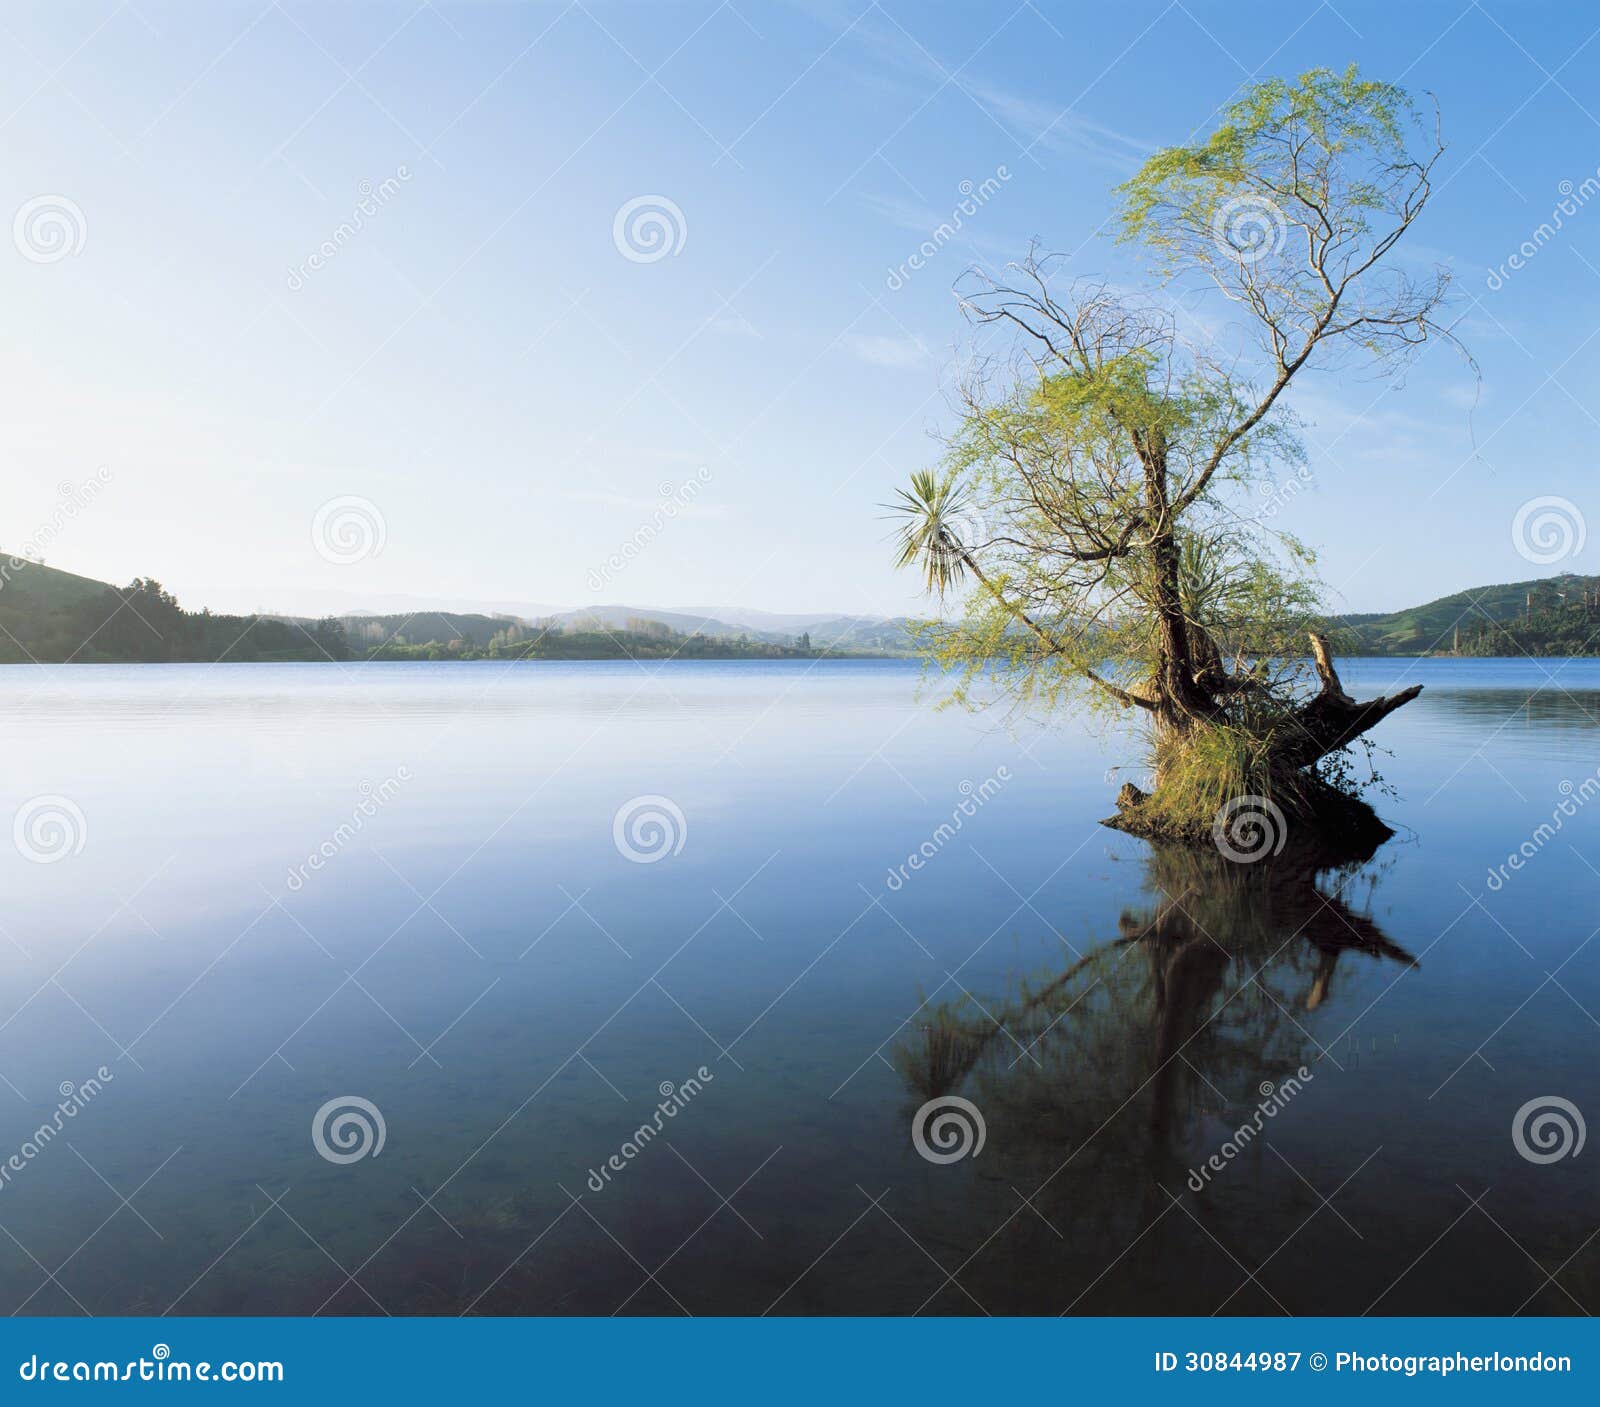 tree reflecting on still water of lake